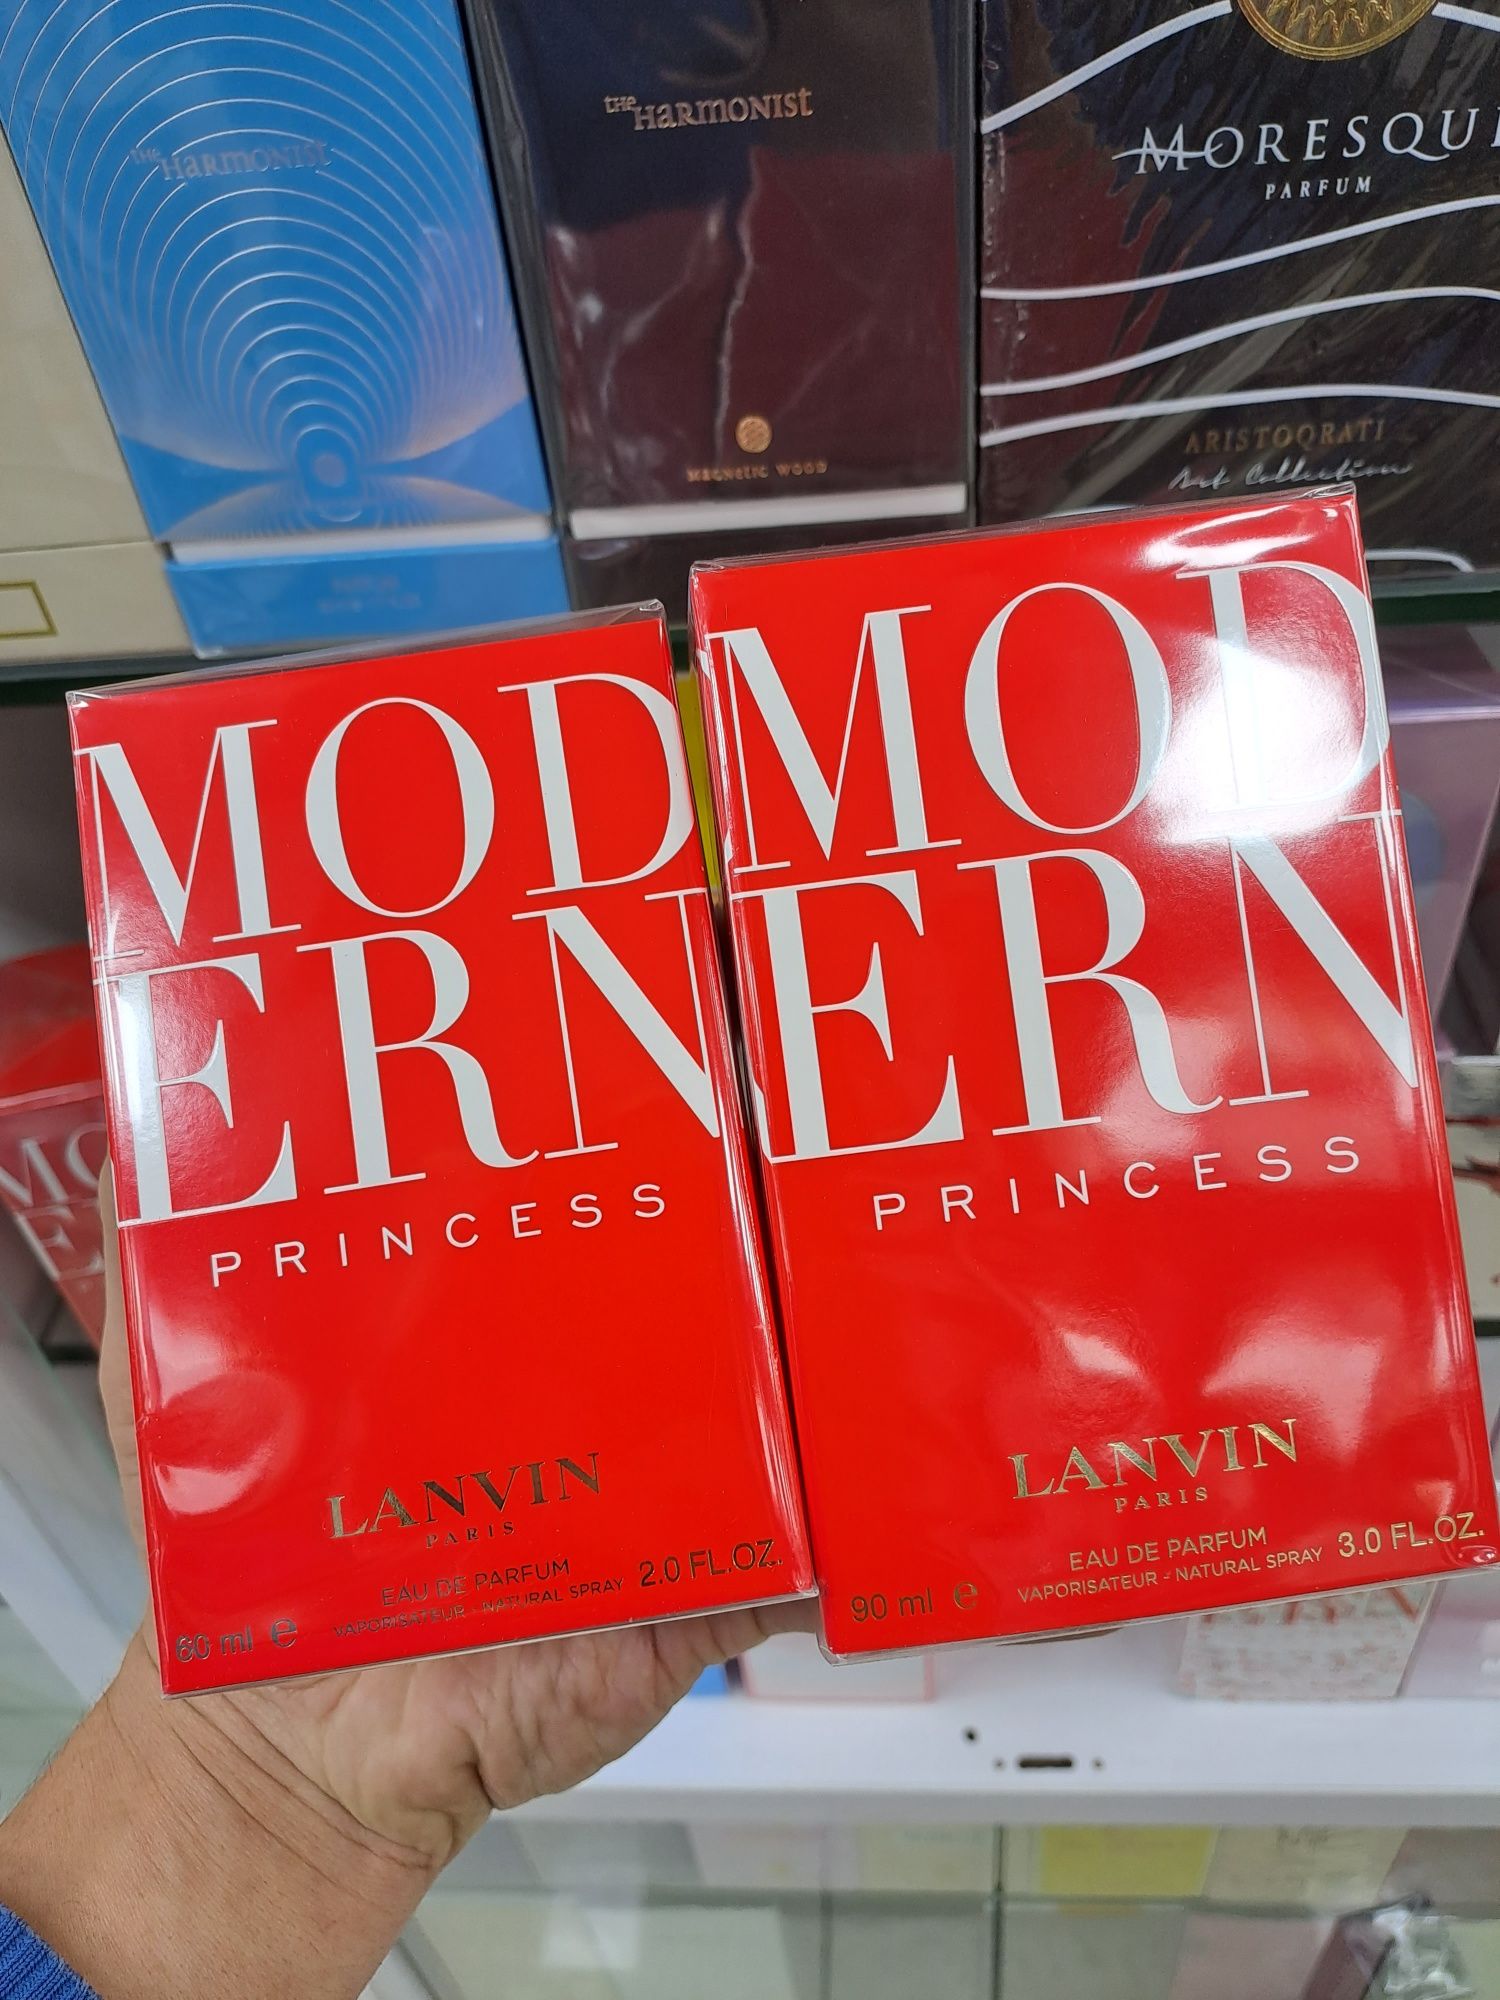 Modern princess Lanvin Paris